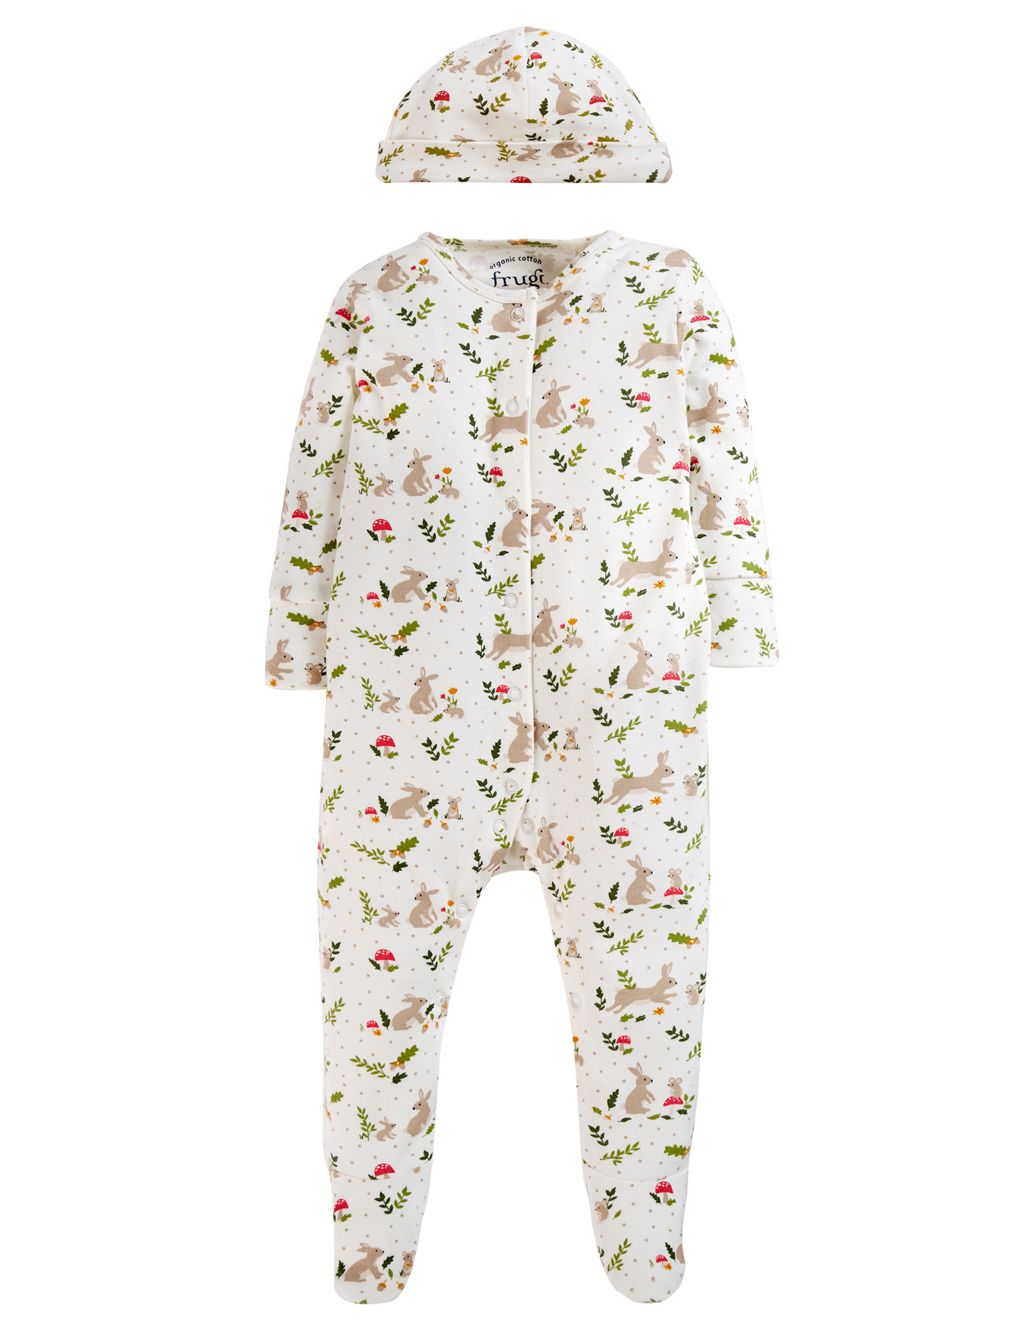 2pc Organic Cotton Animal Sleepsuit Gift Set (0-4 Yrs) image 2